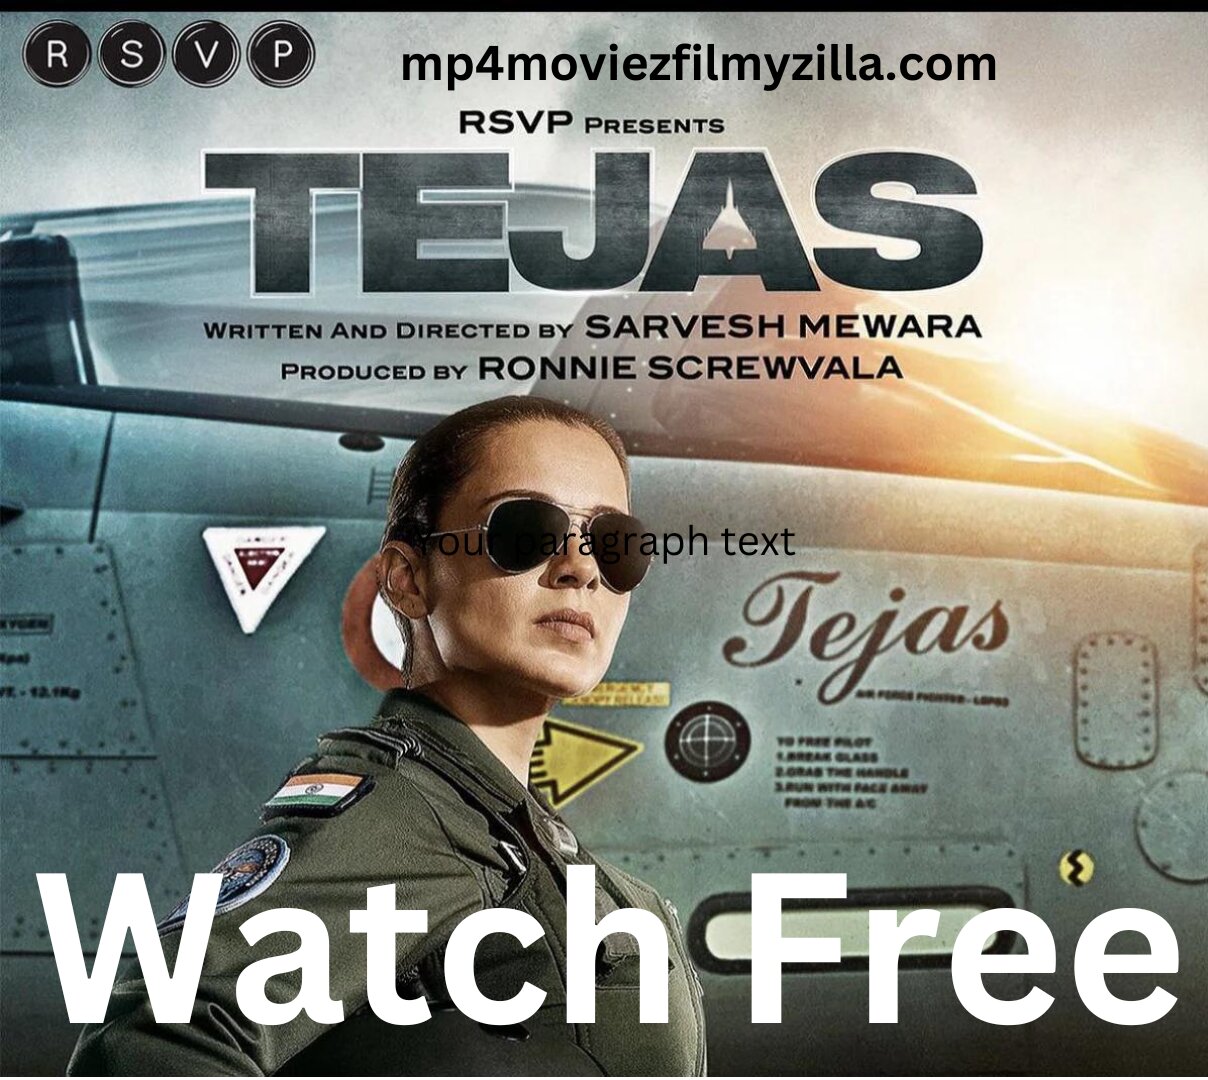 Tejas Movie watch free: mp4moviez filmyzilla Release date, cast, trailer and ticket price